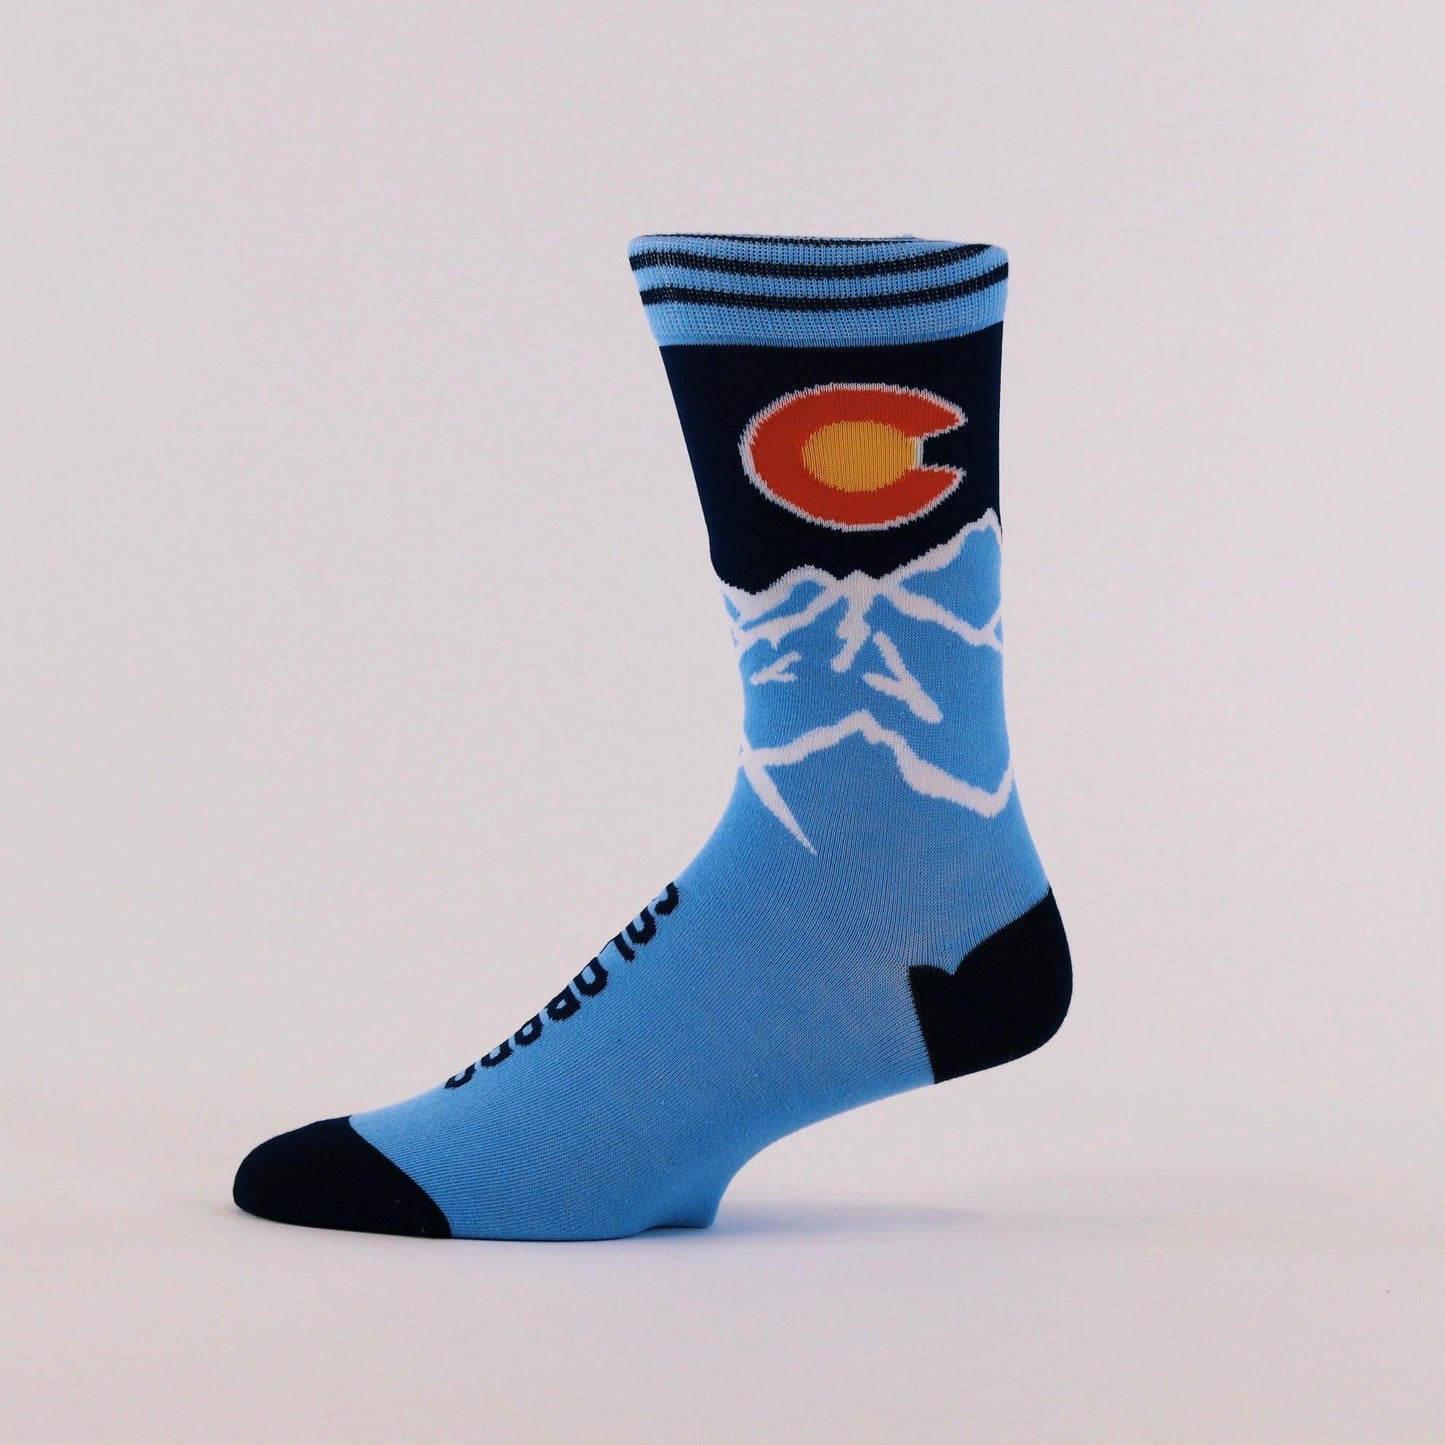 Colorado Mountain Socks - Love From USA